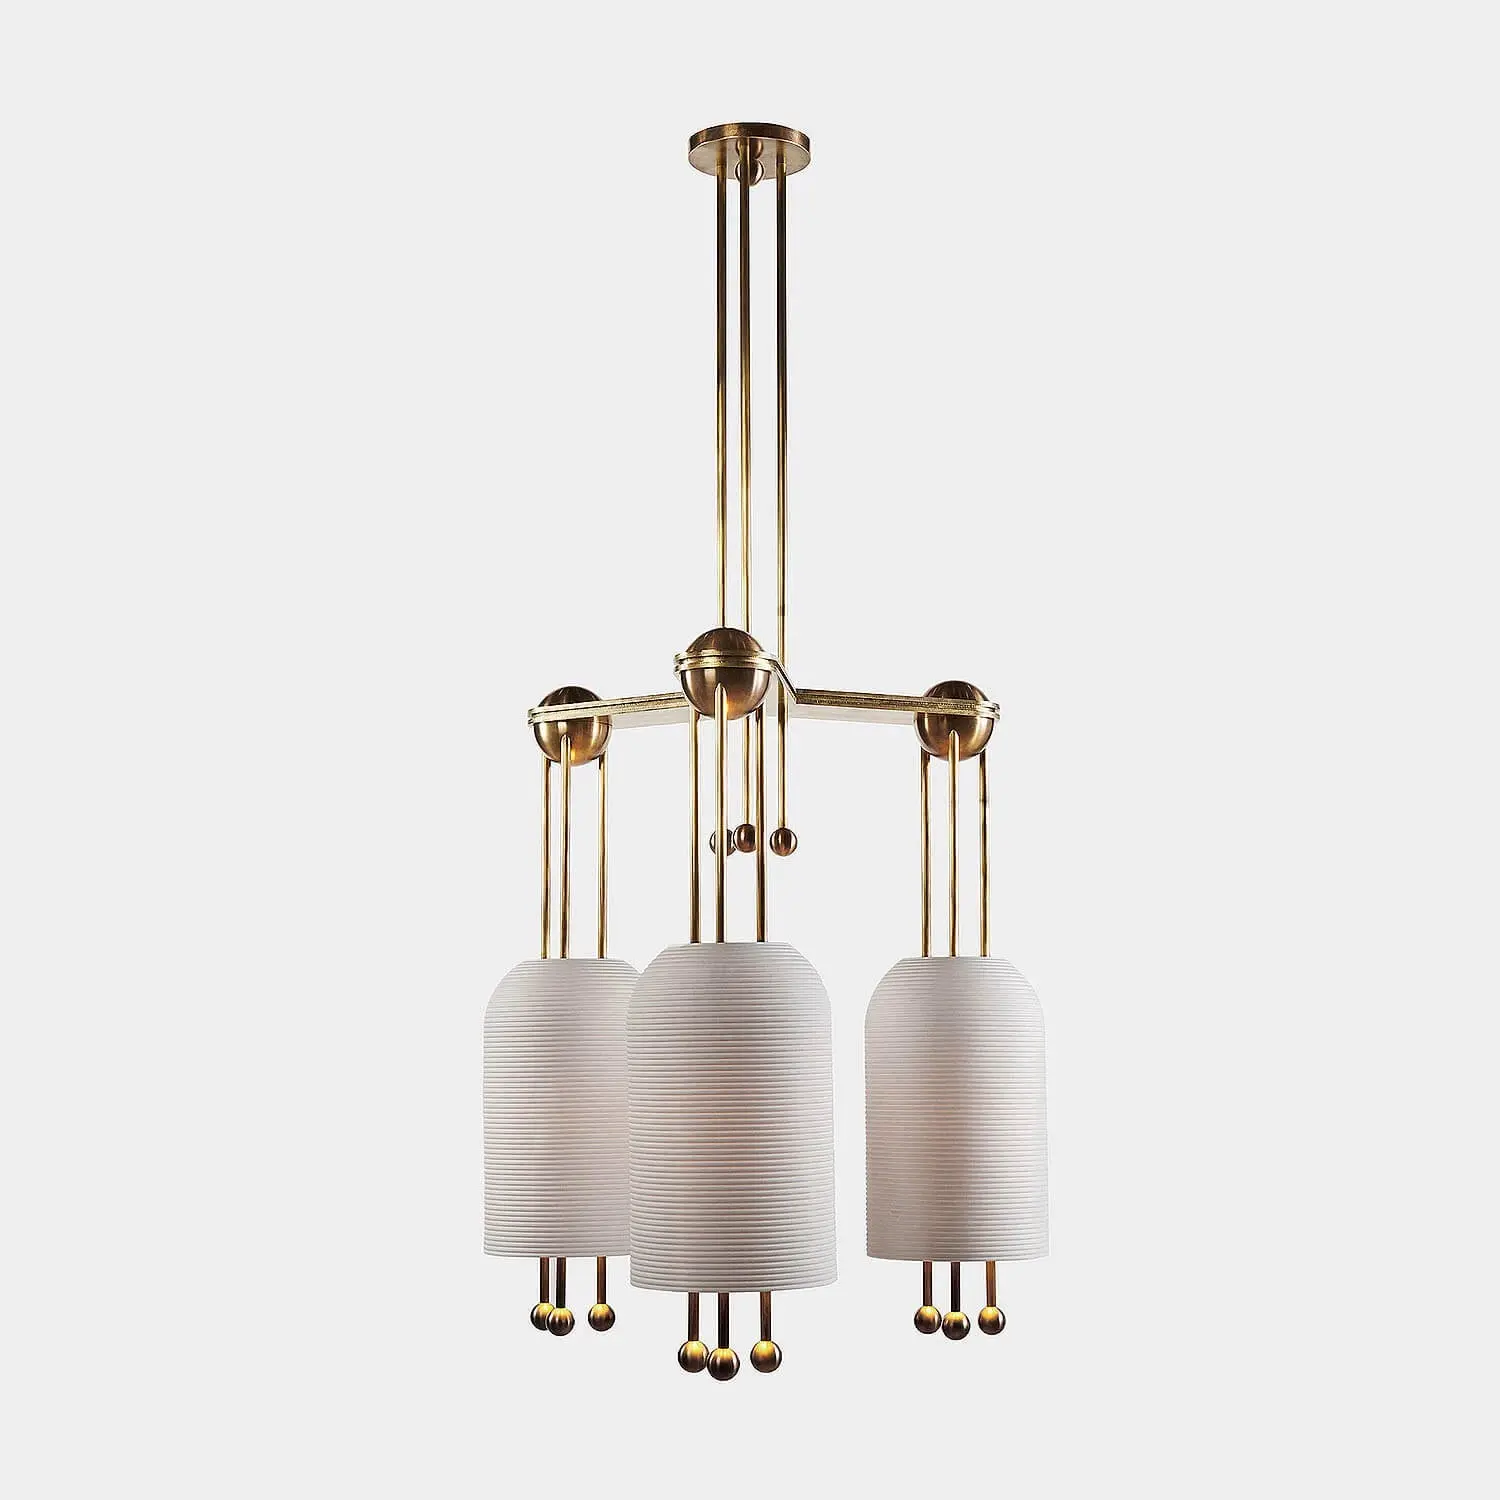 Best Price Household Villa Hotel Vintage Glass Stainless Steel Hanging Lamp Lighting Led Decorative Pendant Light White